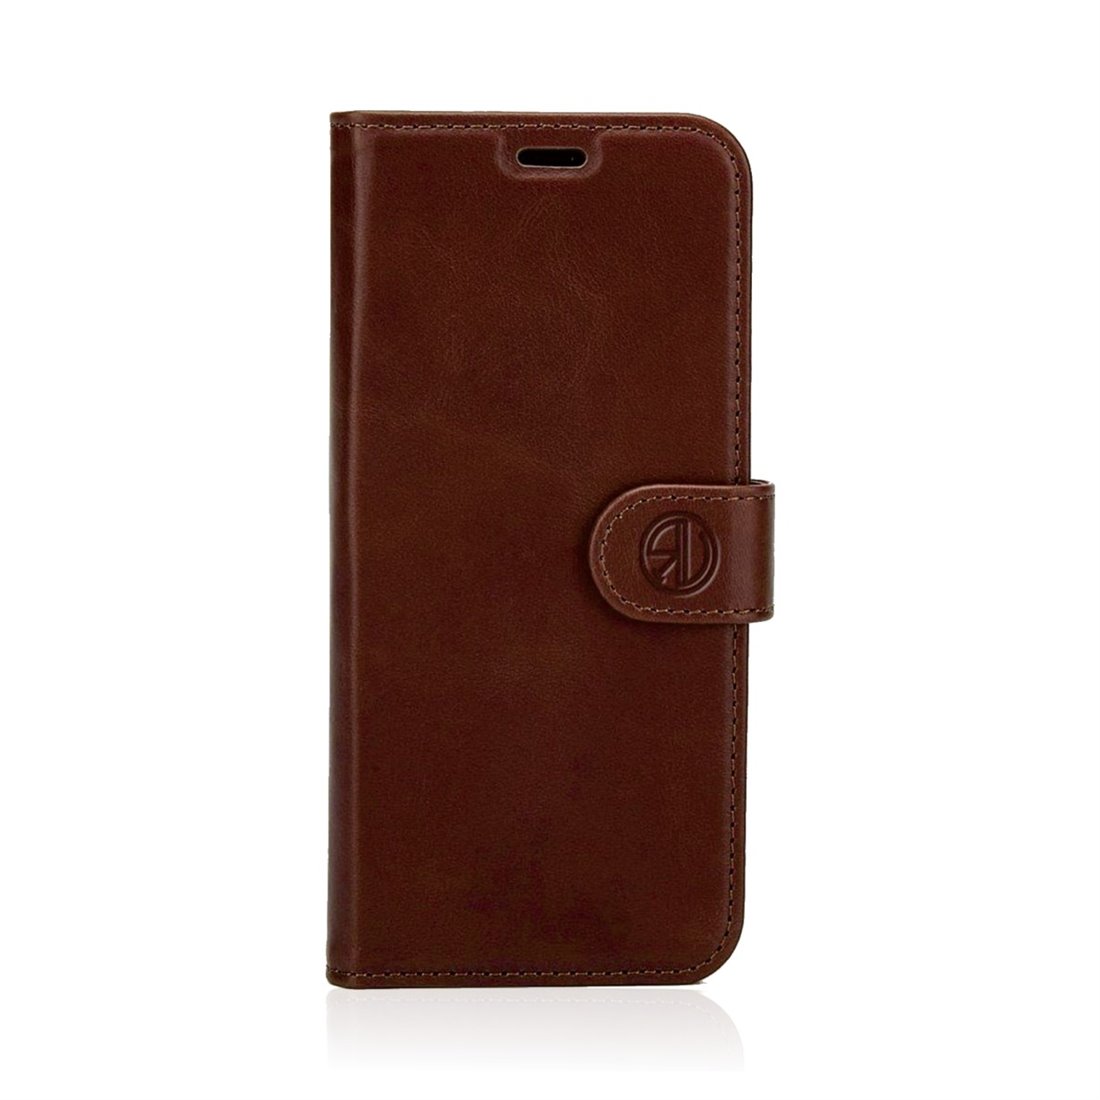 Genuine Leather Book Case iPhone 7/8 dark brown